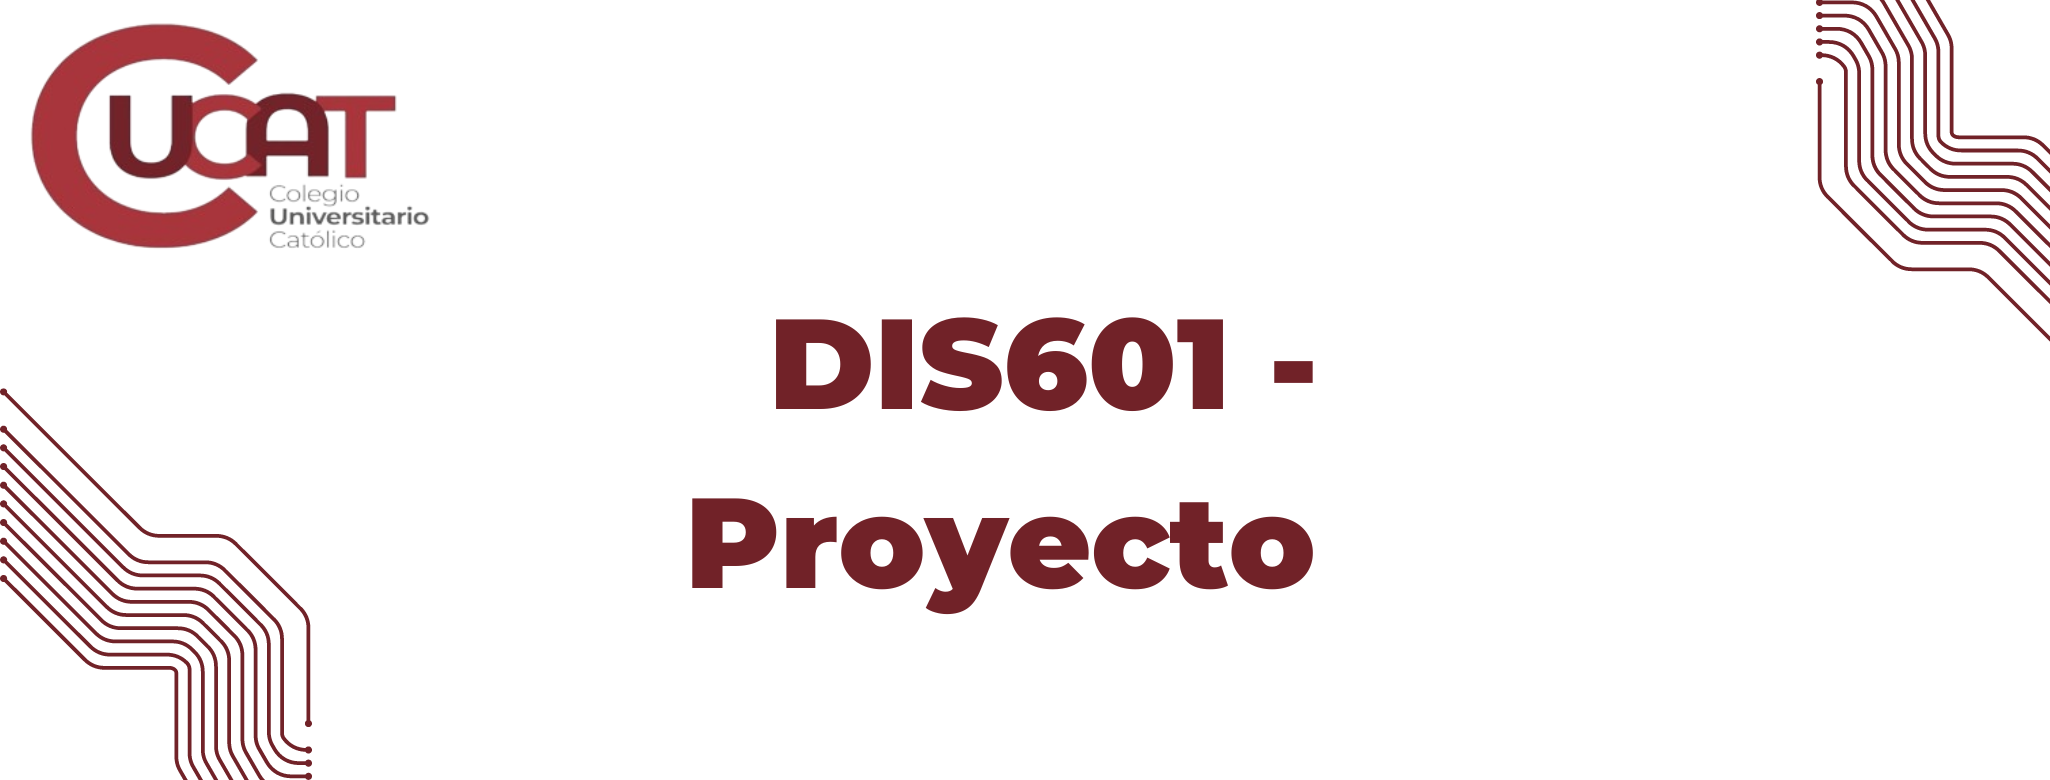 DIS504 -Proyecto